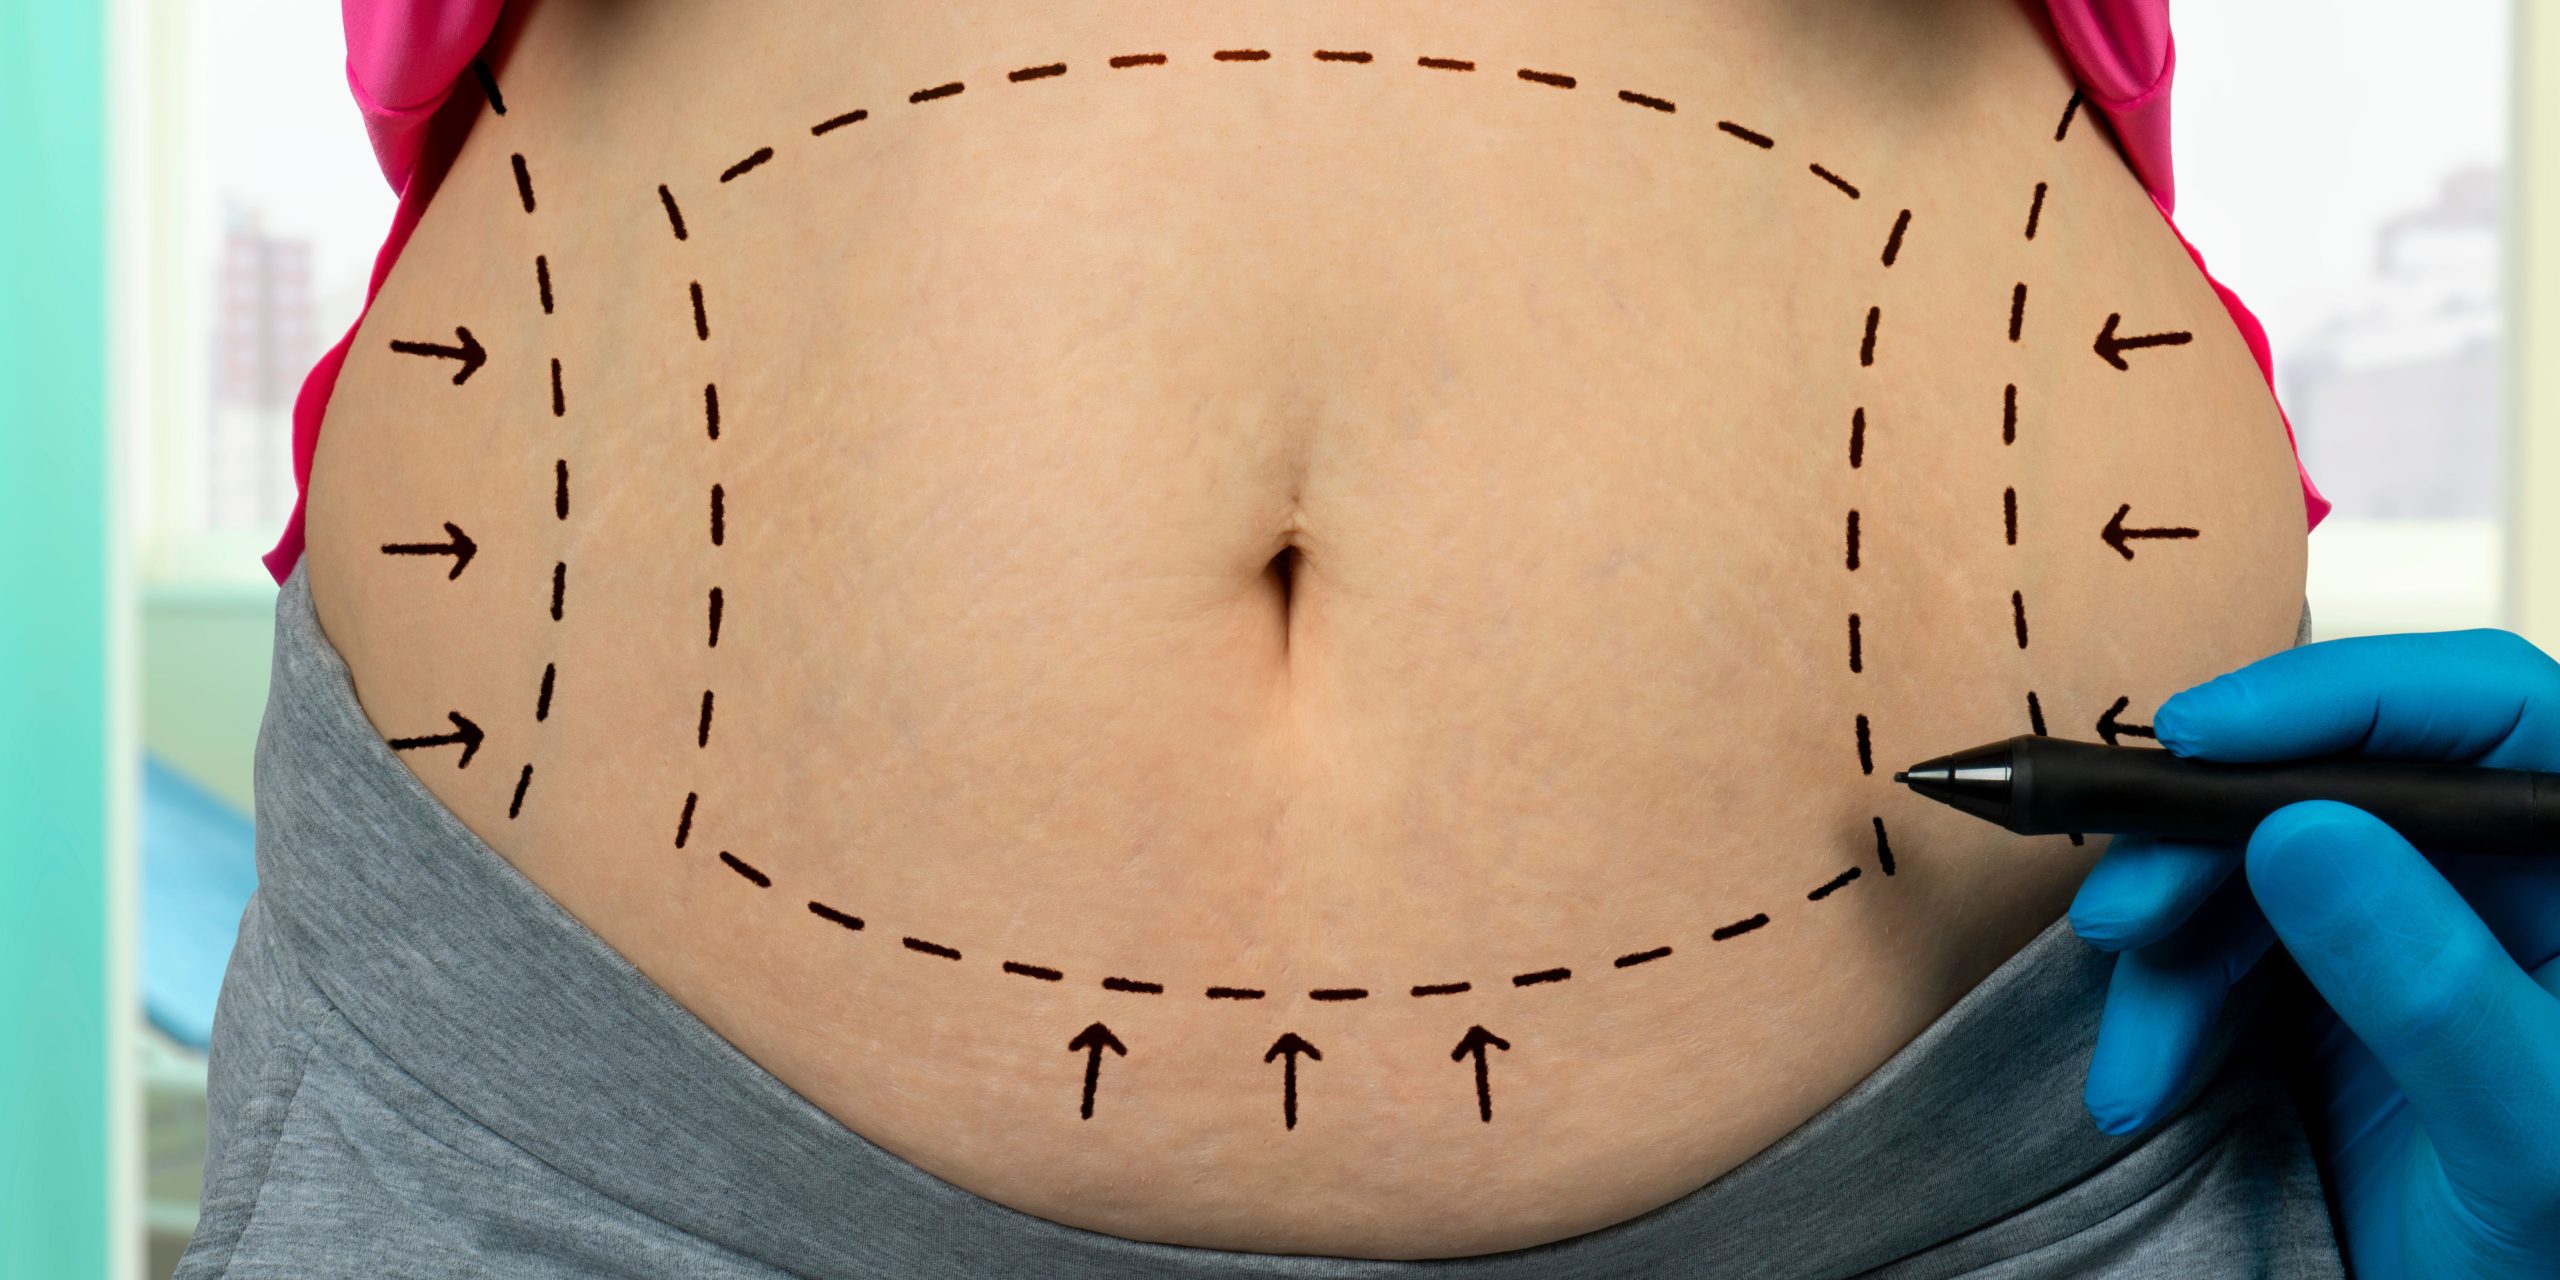 Abdominoplasty: Tummy Tuck Surgery